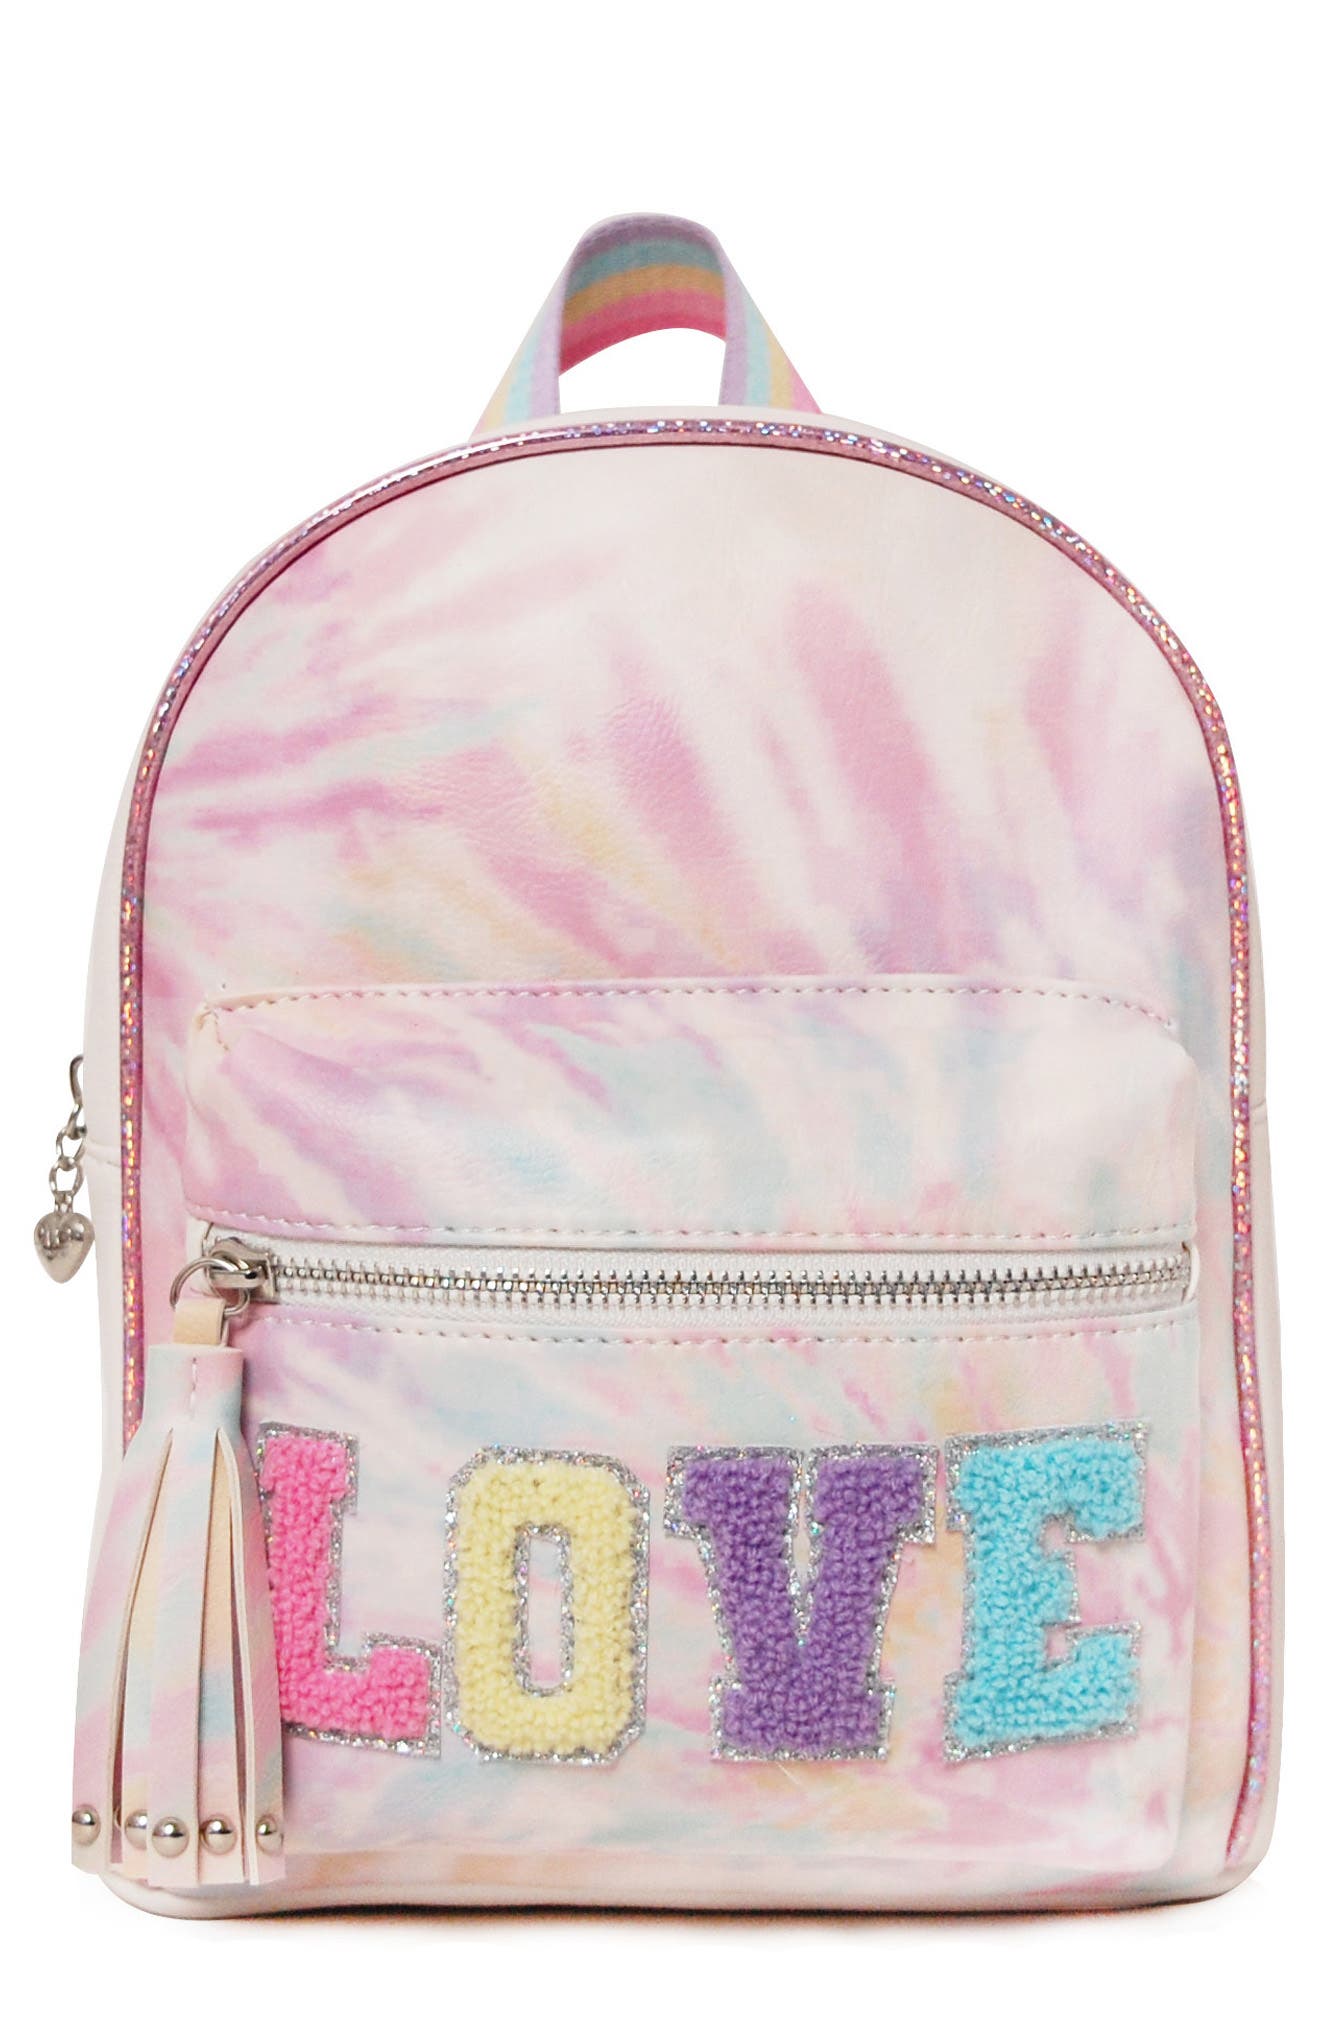 backpack preschool girl